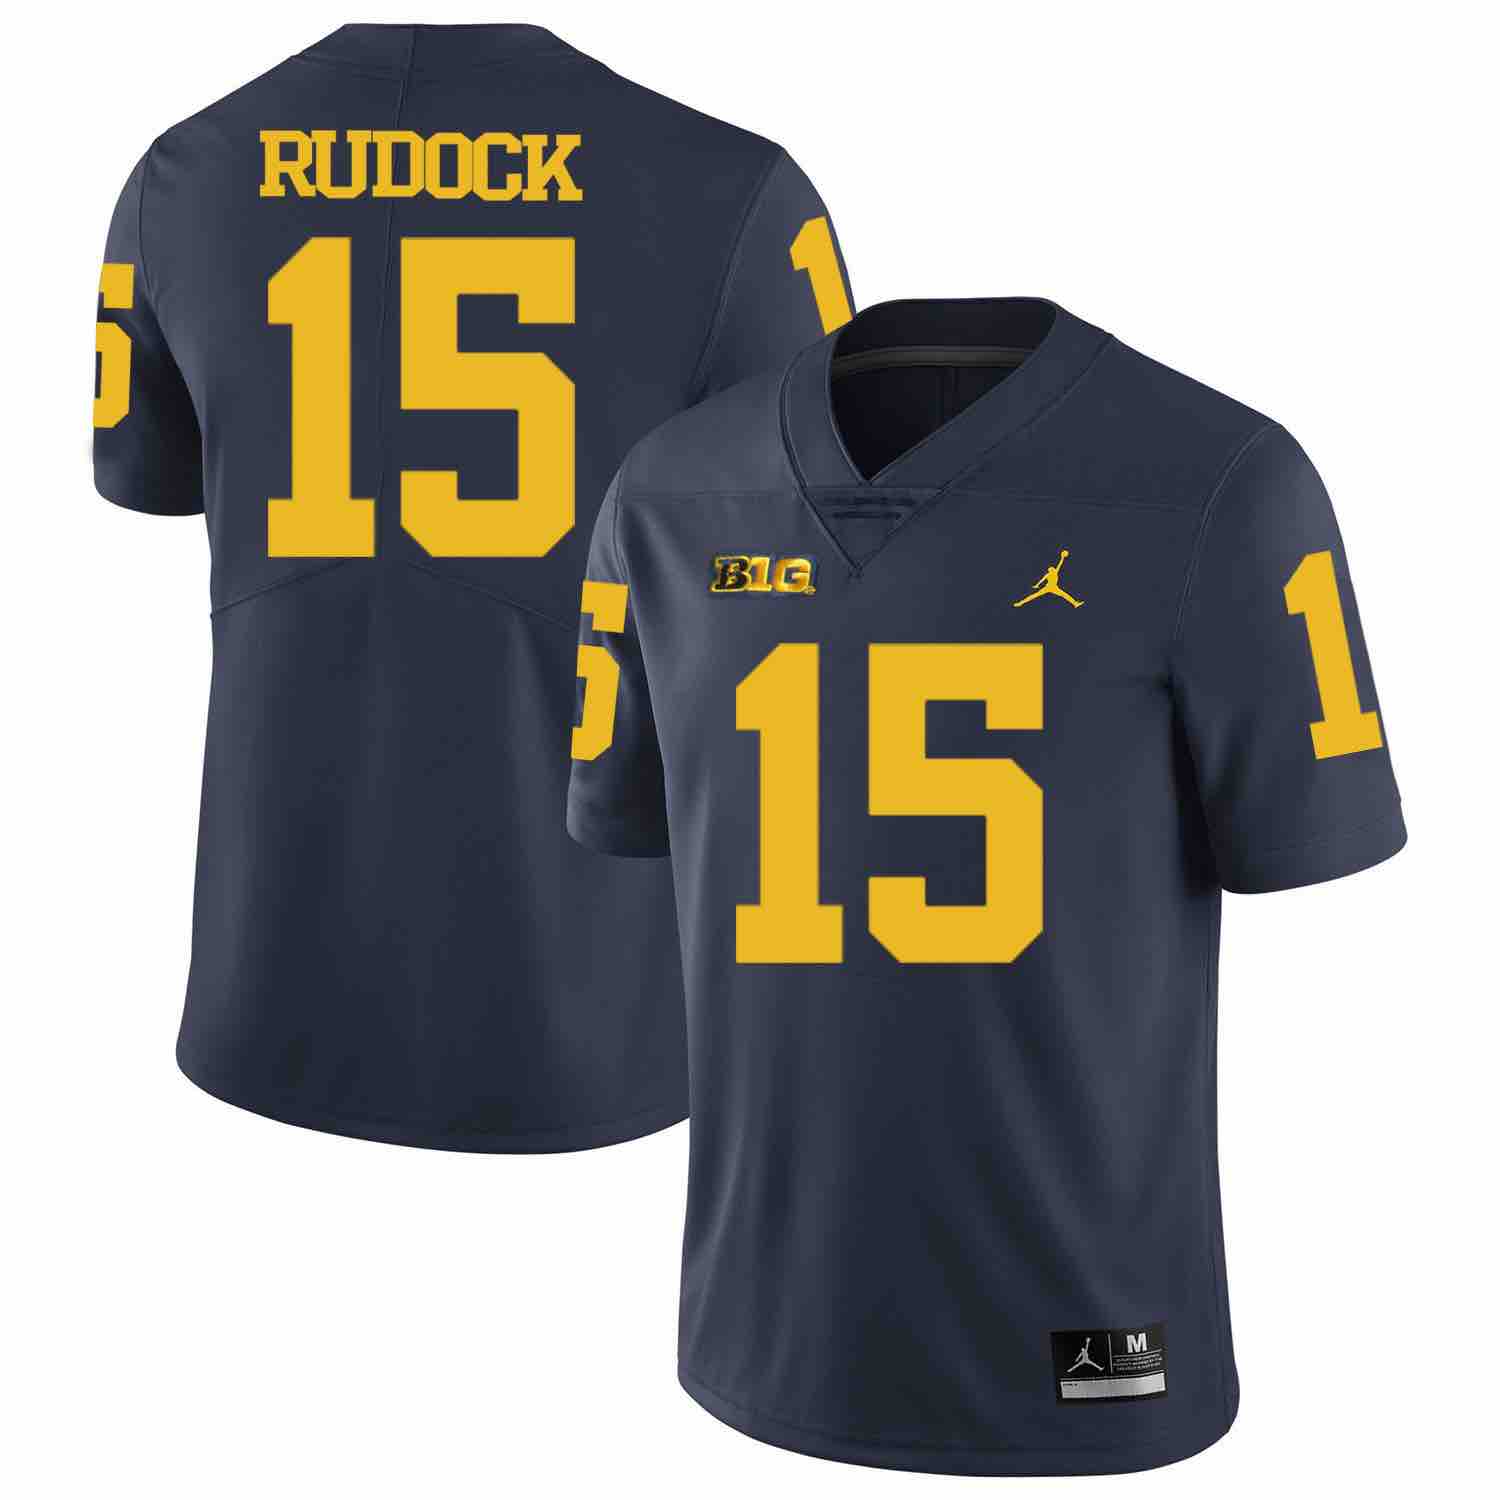 NCAA Michigan Wolverines #15 Rudock D.Blue Football Jersey